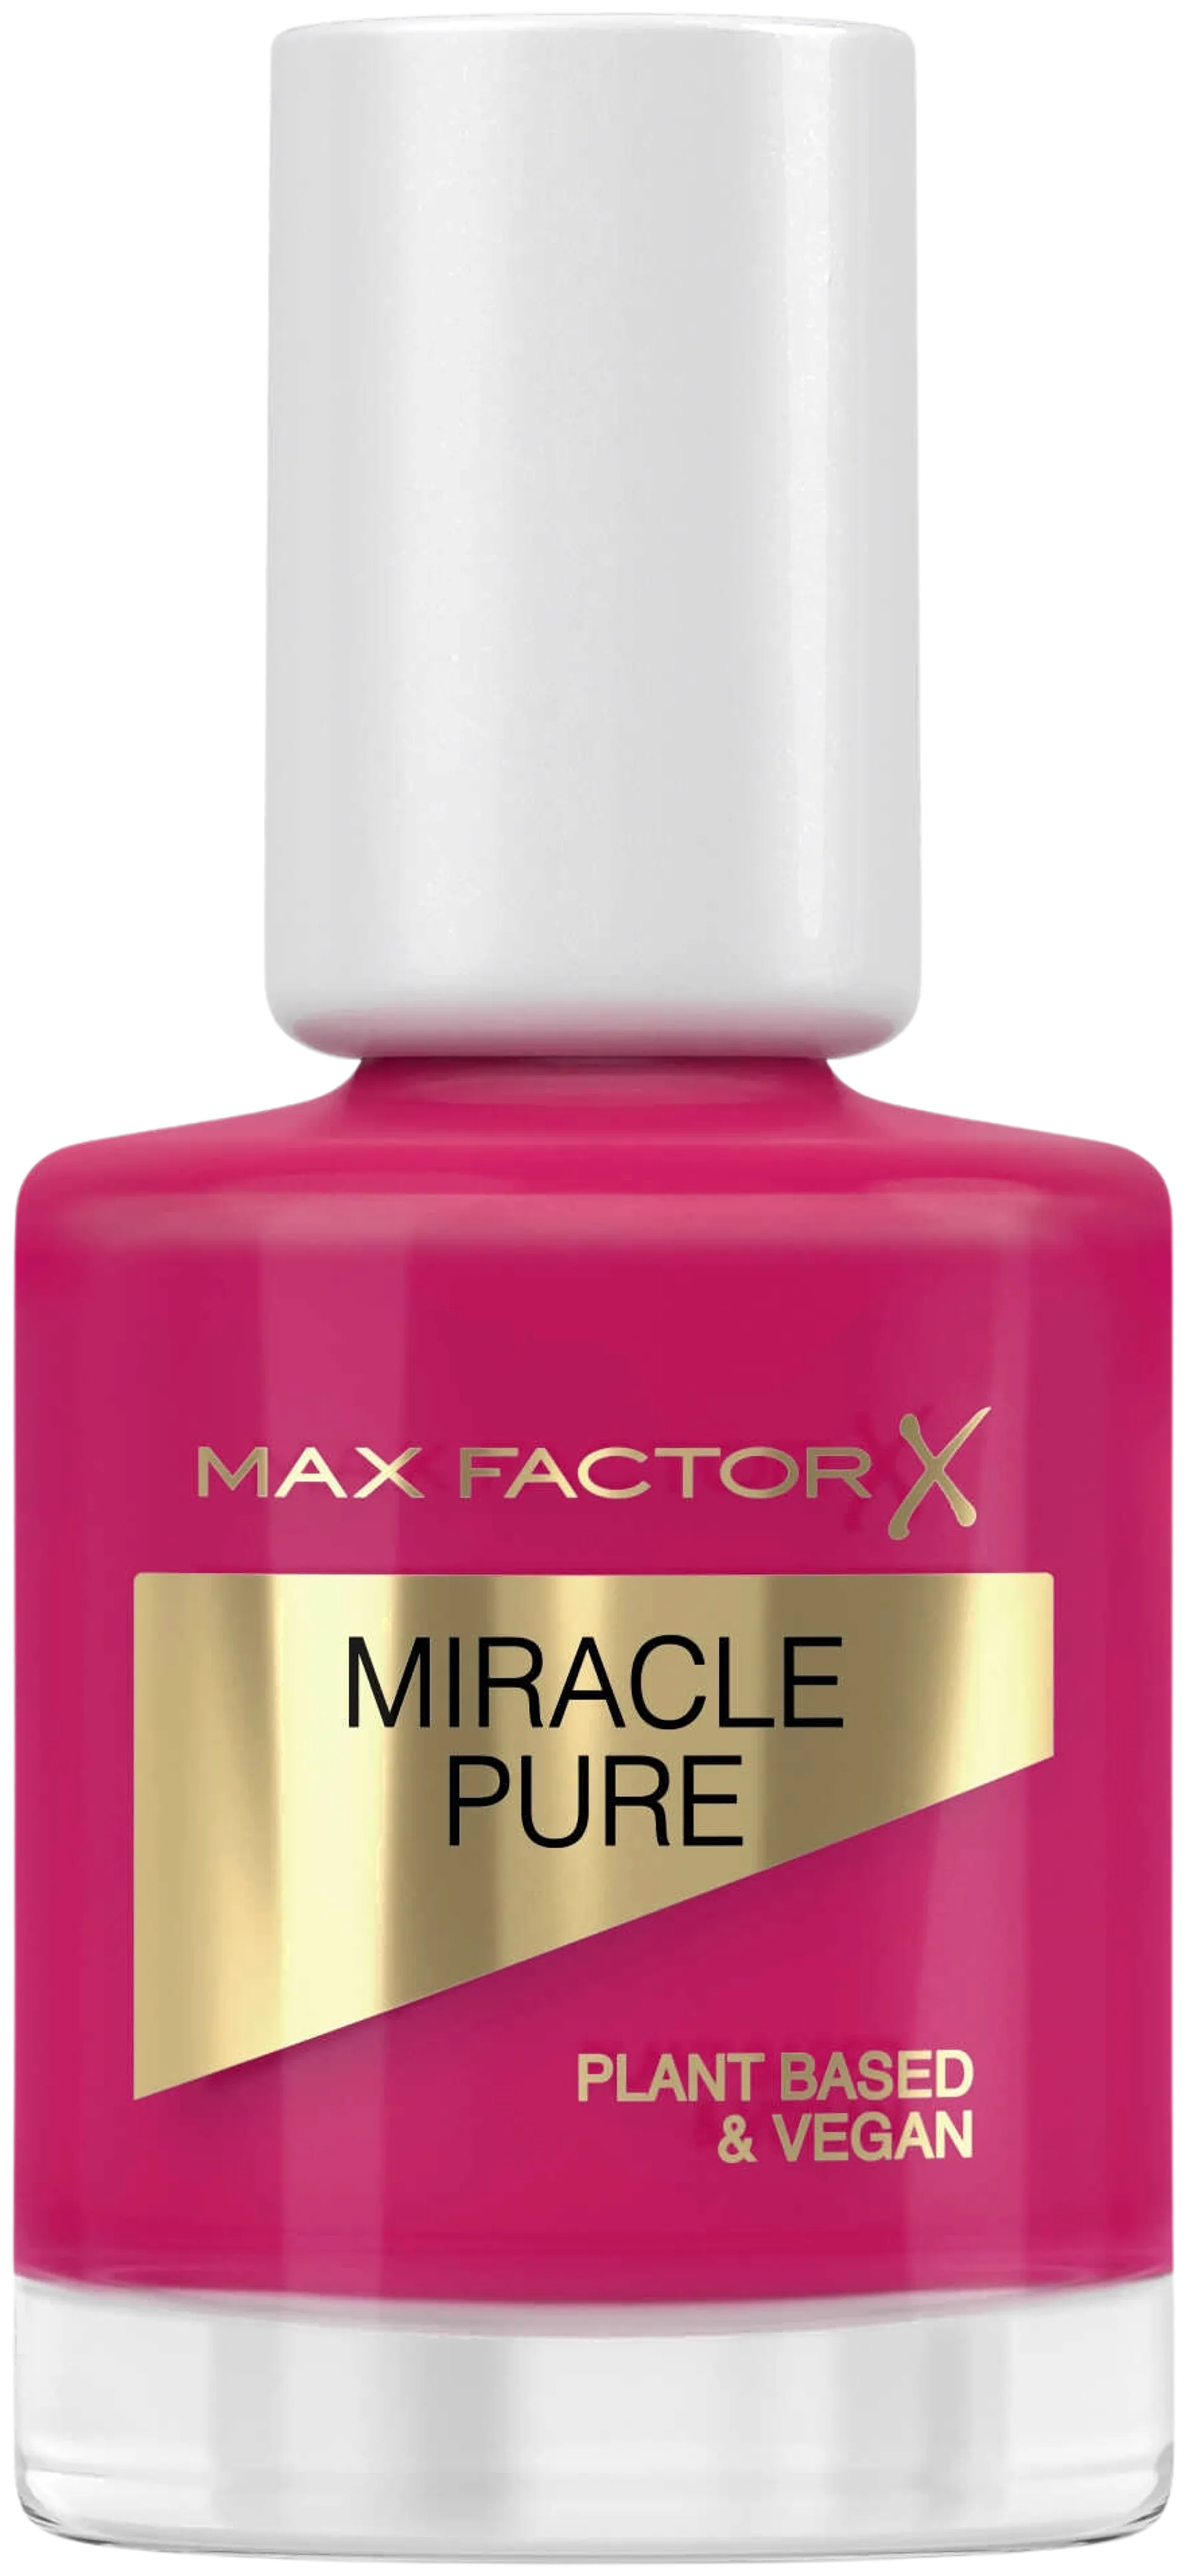 Max Factor Miracle Pure Nail 265 Fiery Fuchsia 12 ml kynsilakka - 265 Fiery Fuchsia - 1